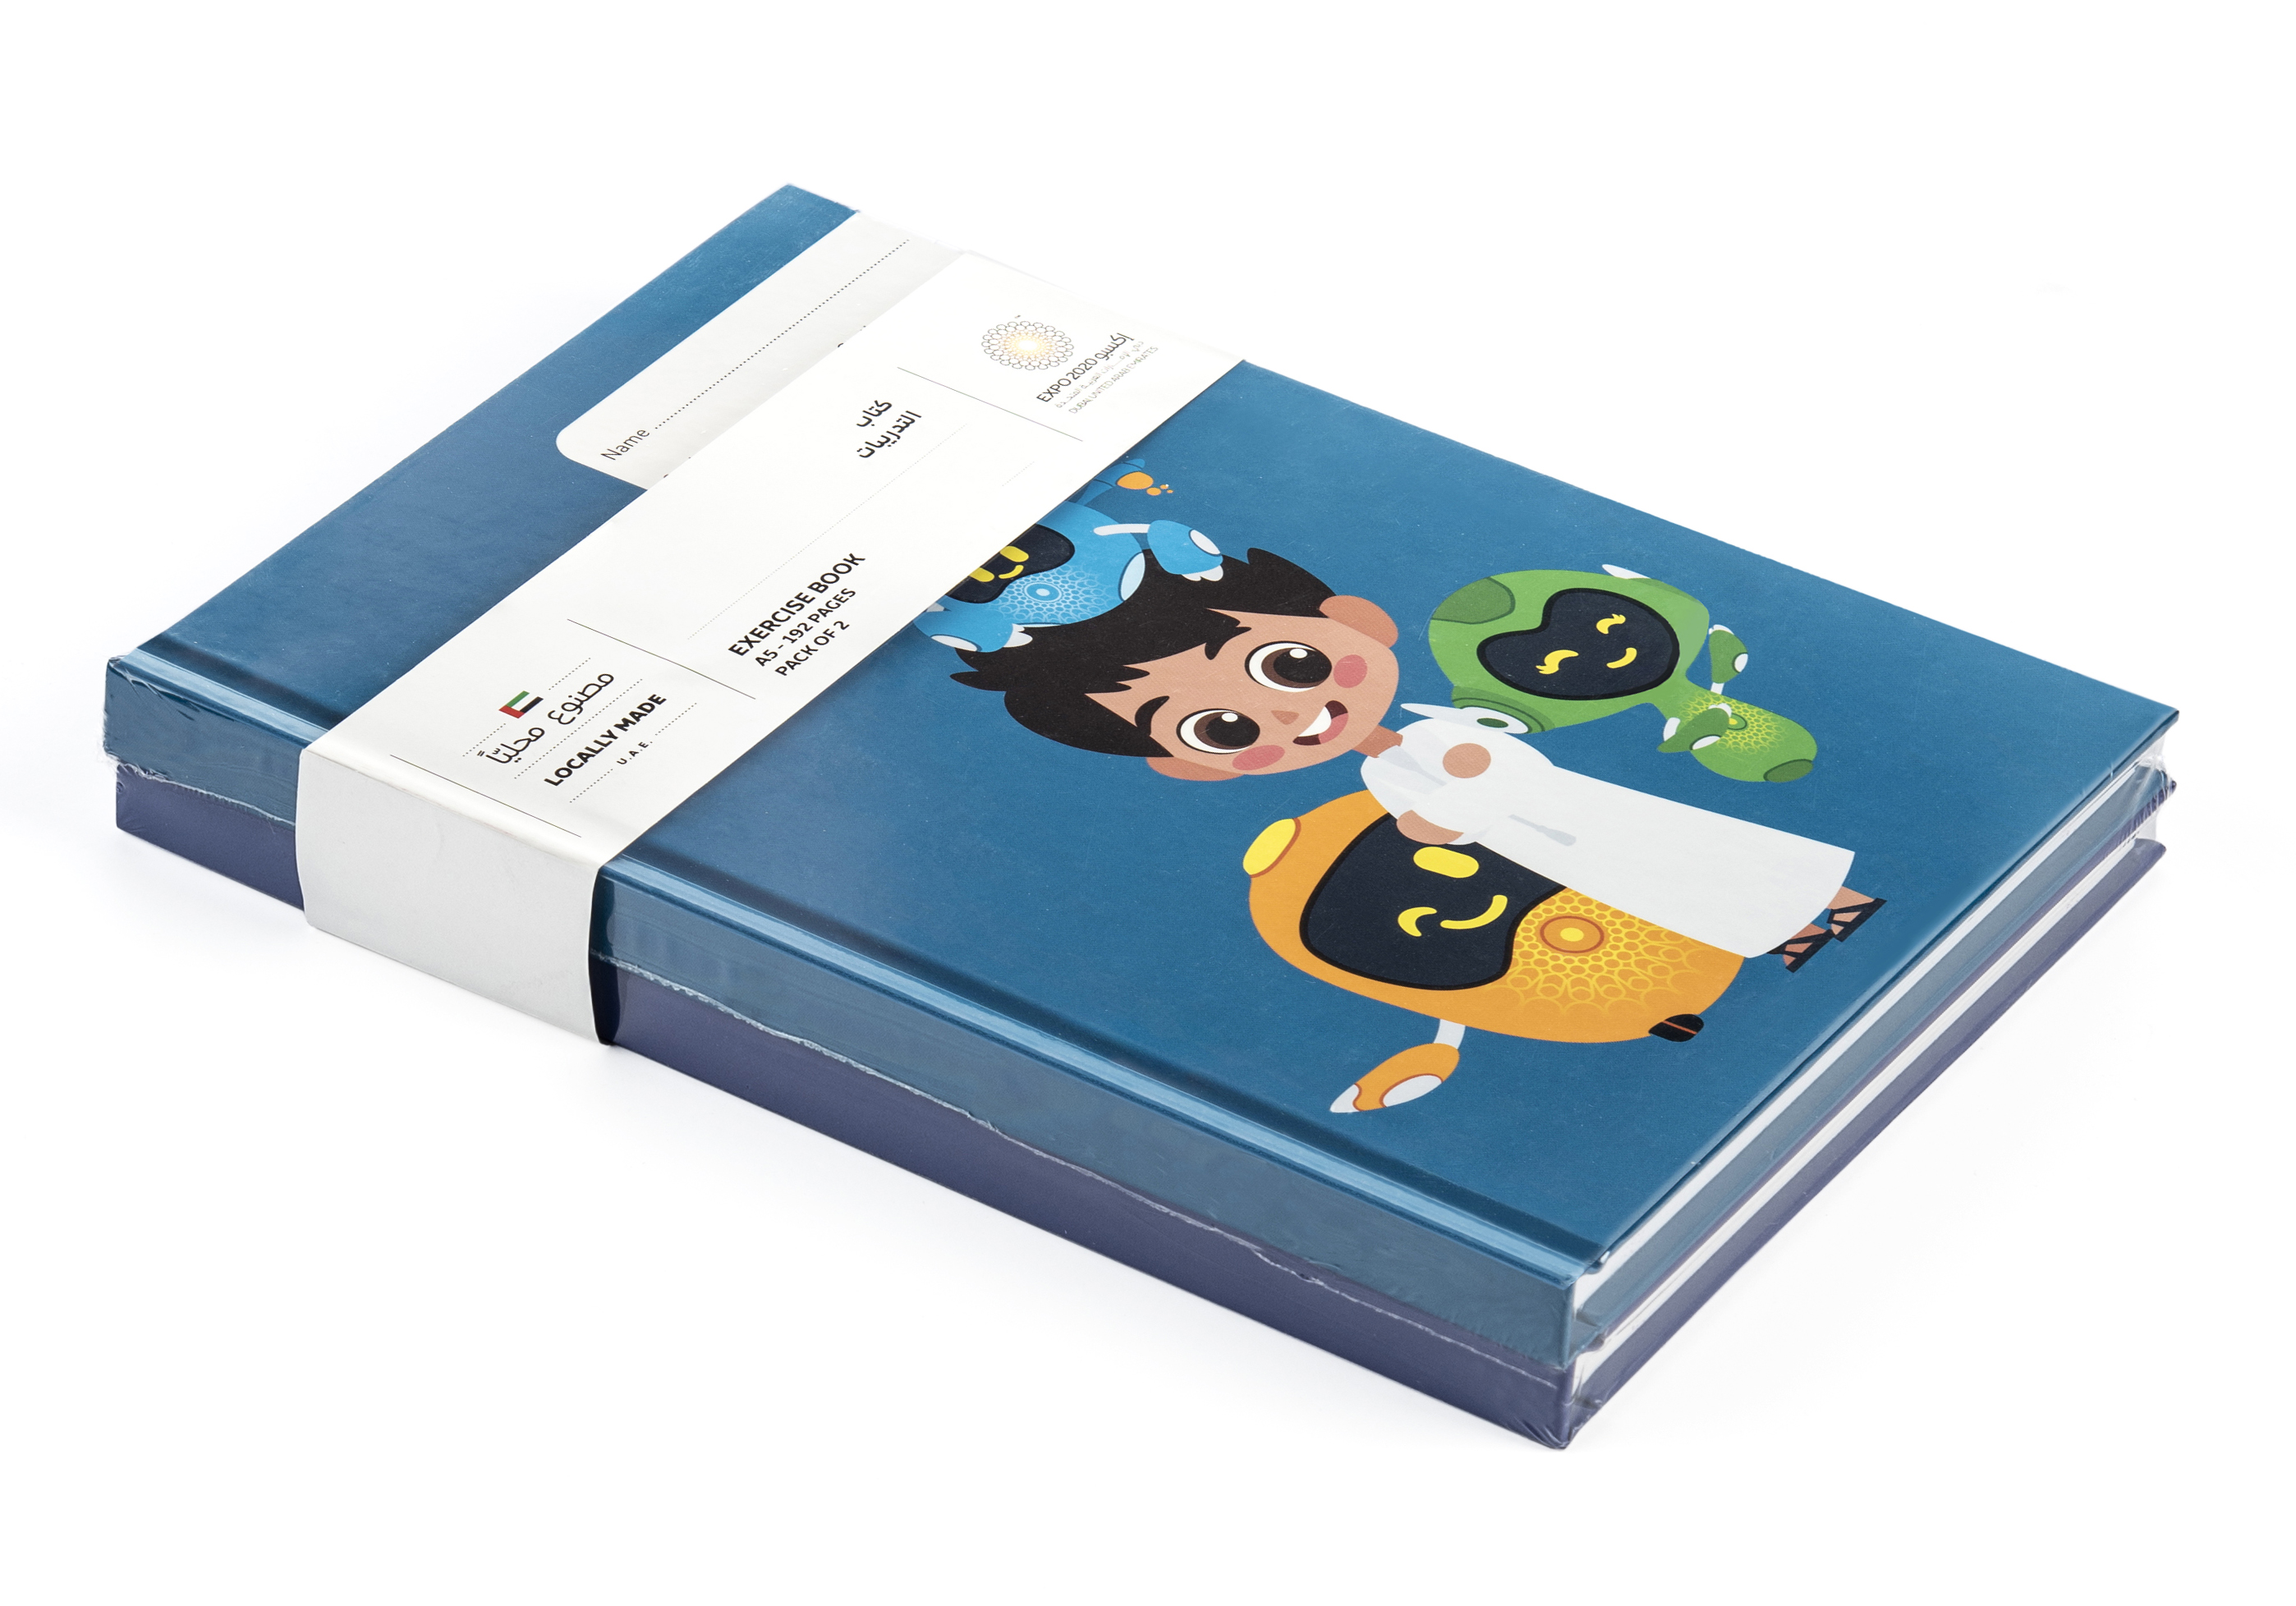 Expo 2020 Dubai Mascots A5 Hardcase Exercise Books Pack of 2 - 192 Pages - Rashid